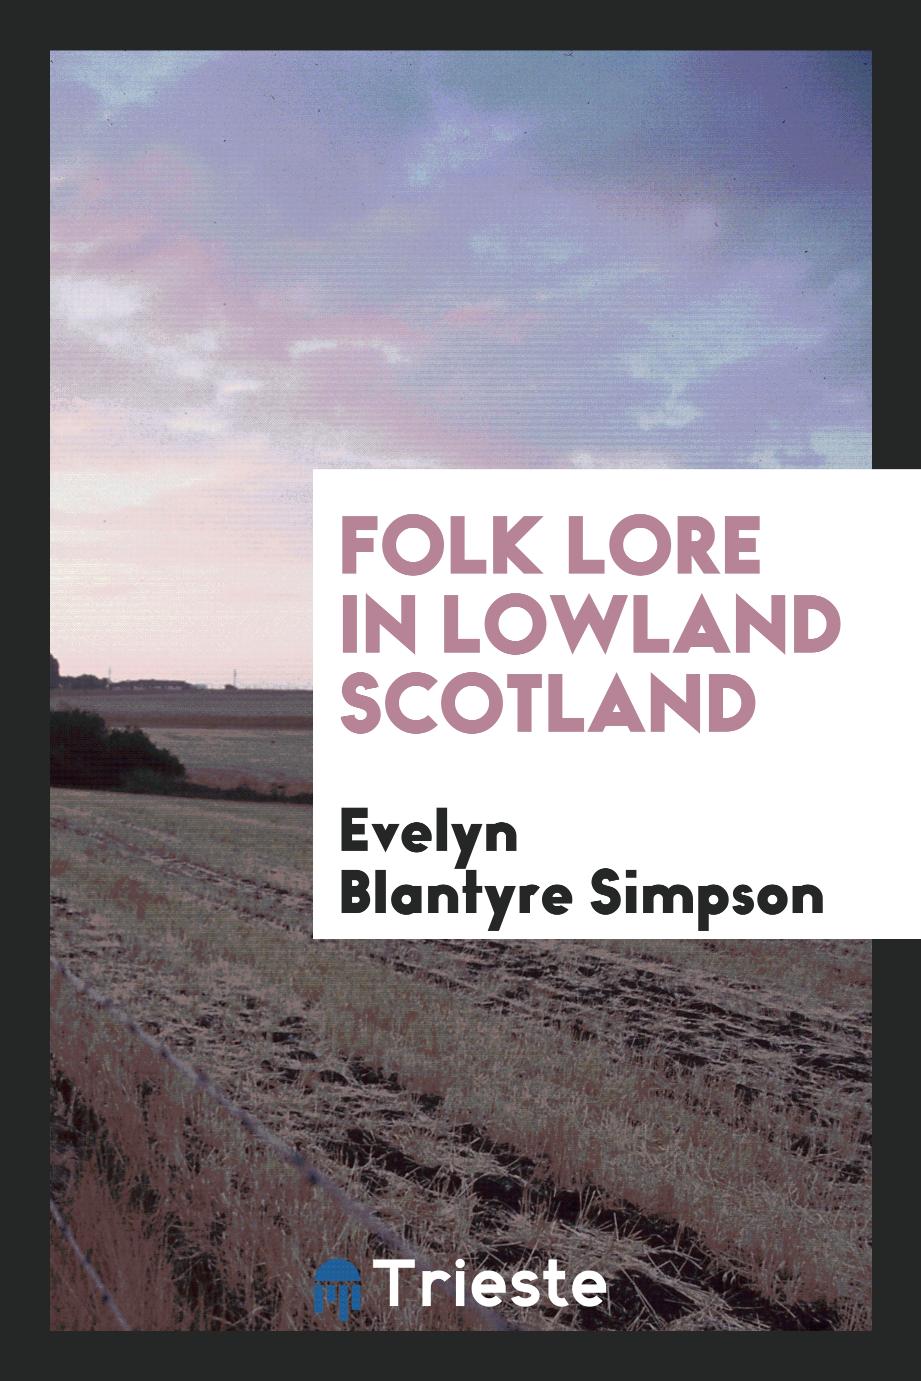 Folk lore in Lowland Scotland